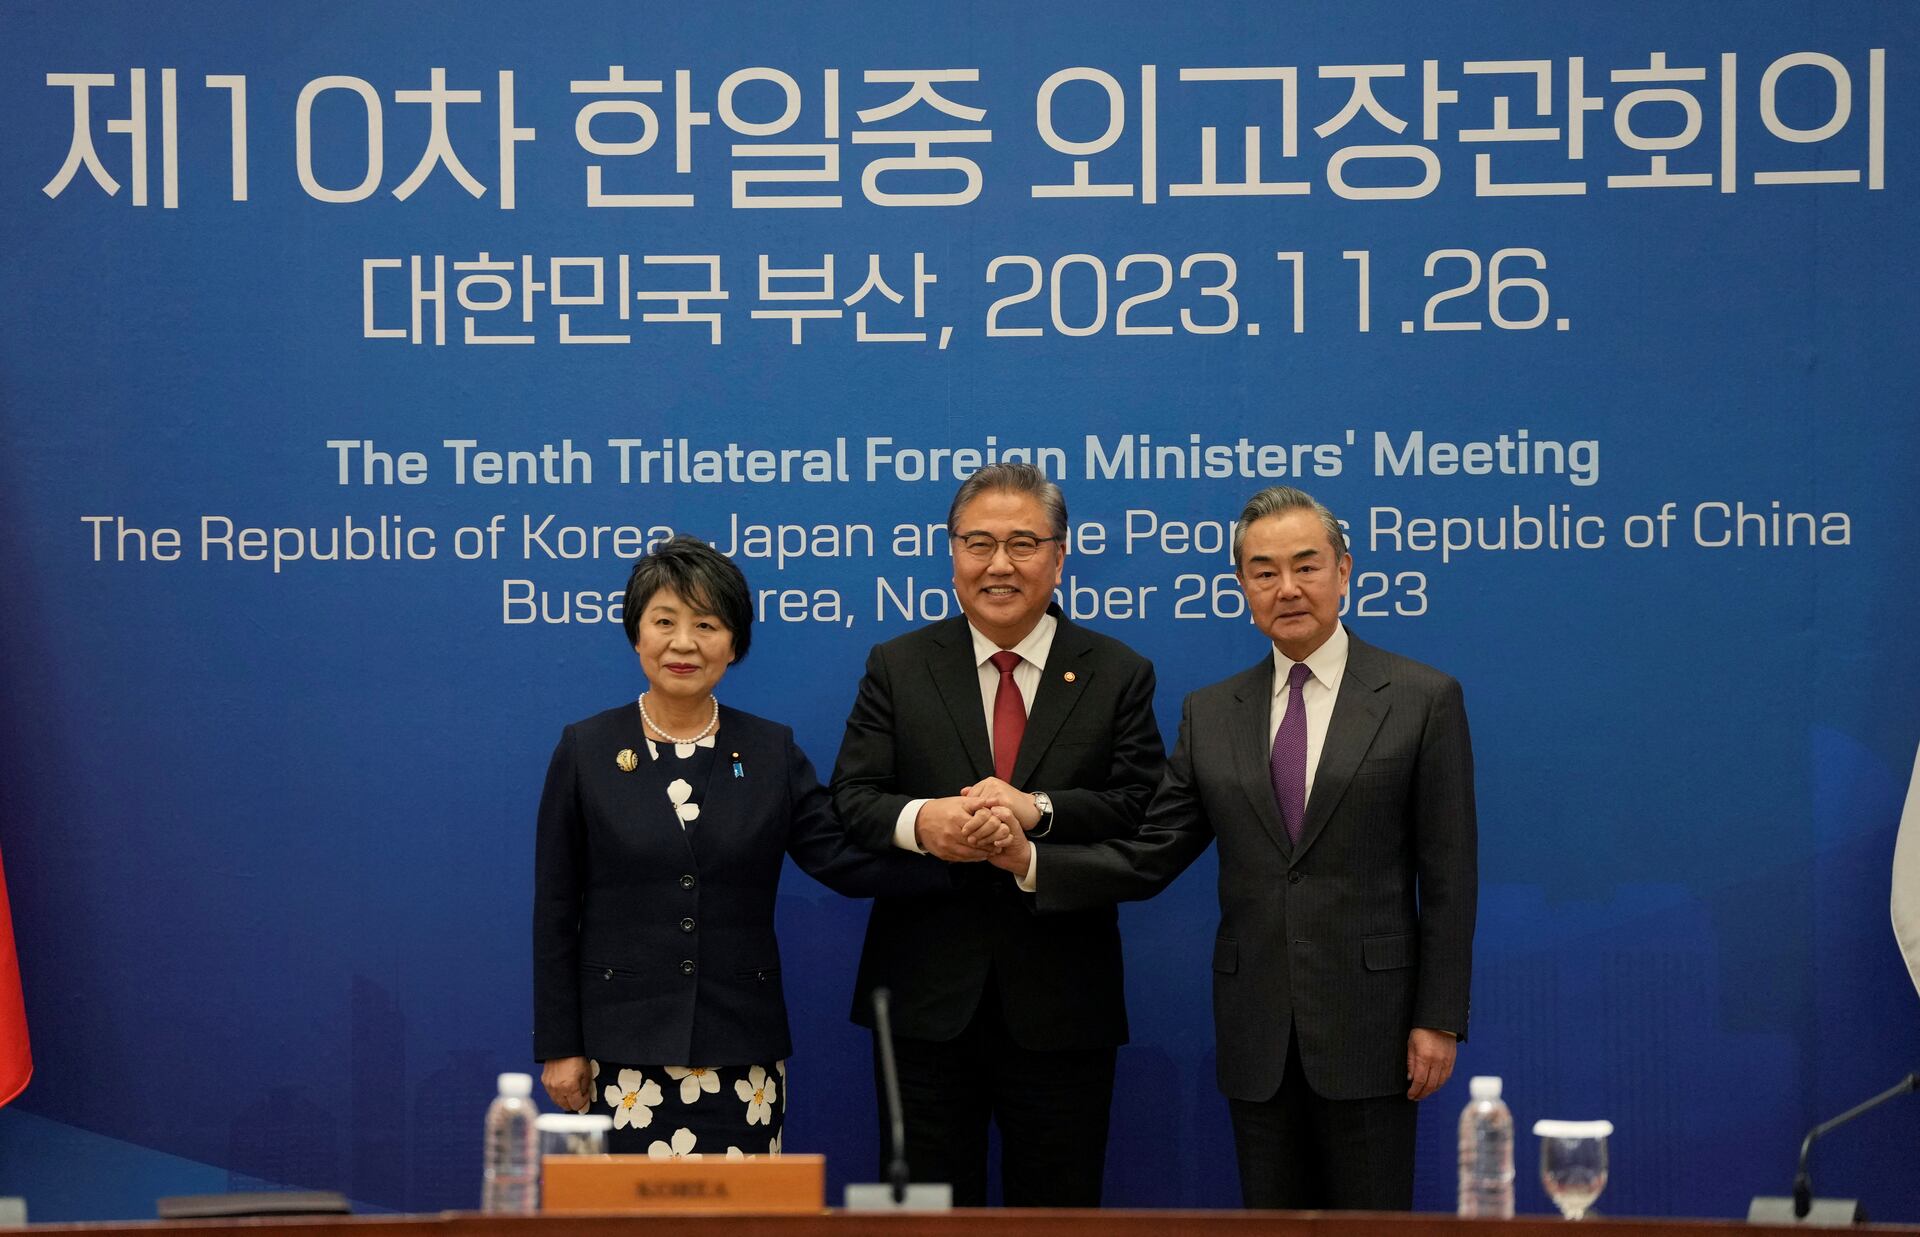 Strategic Implications of the Busan Summit 2023